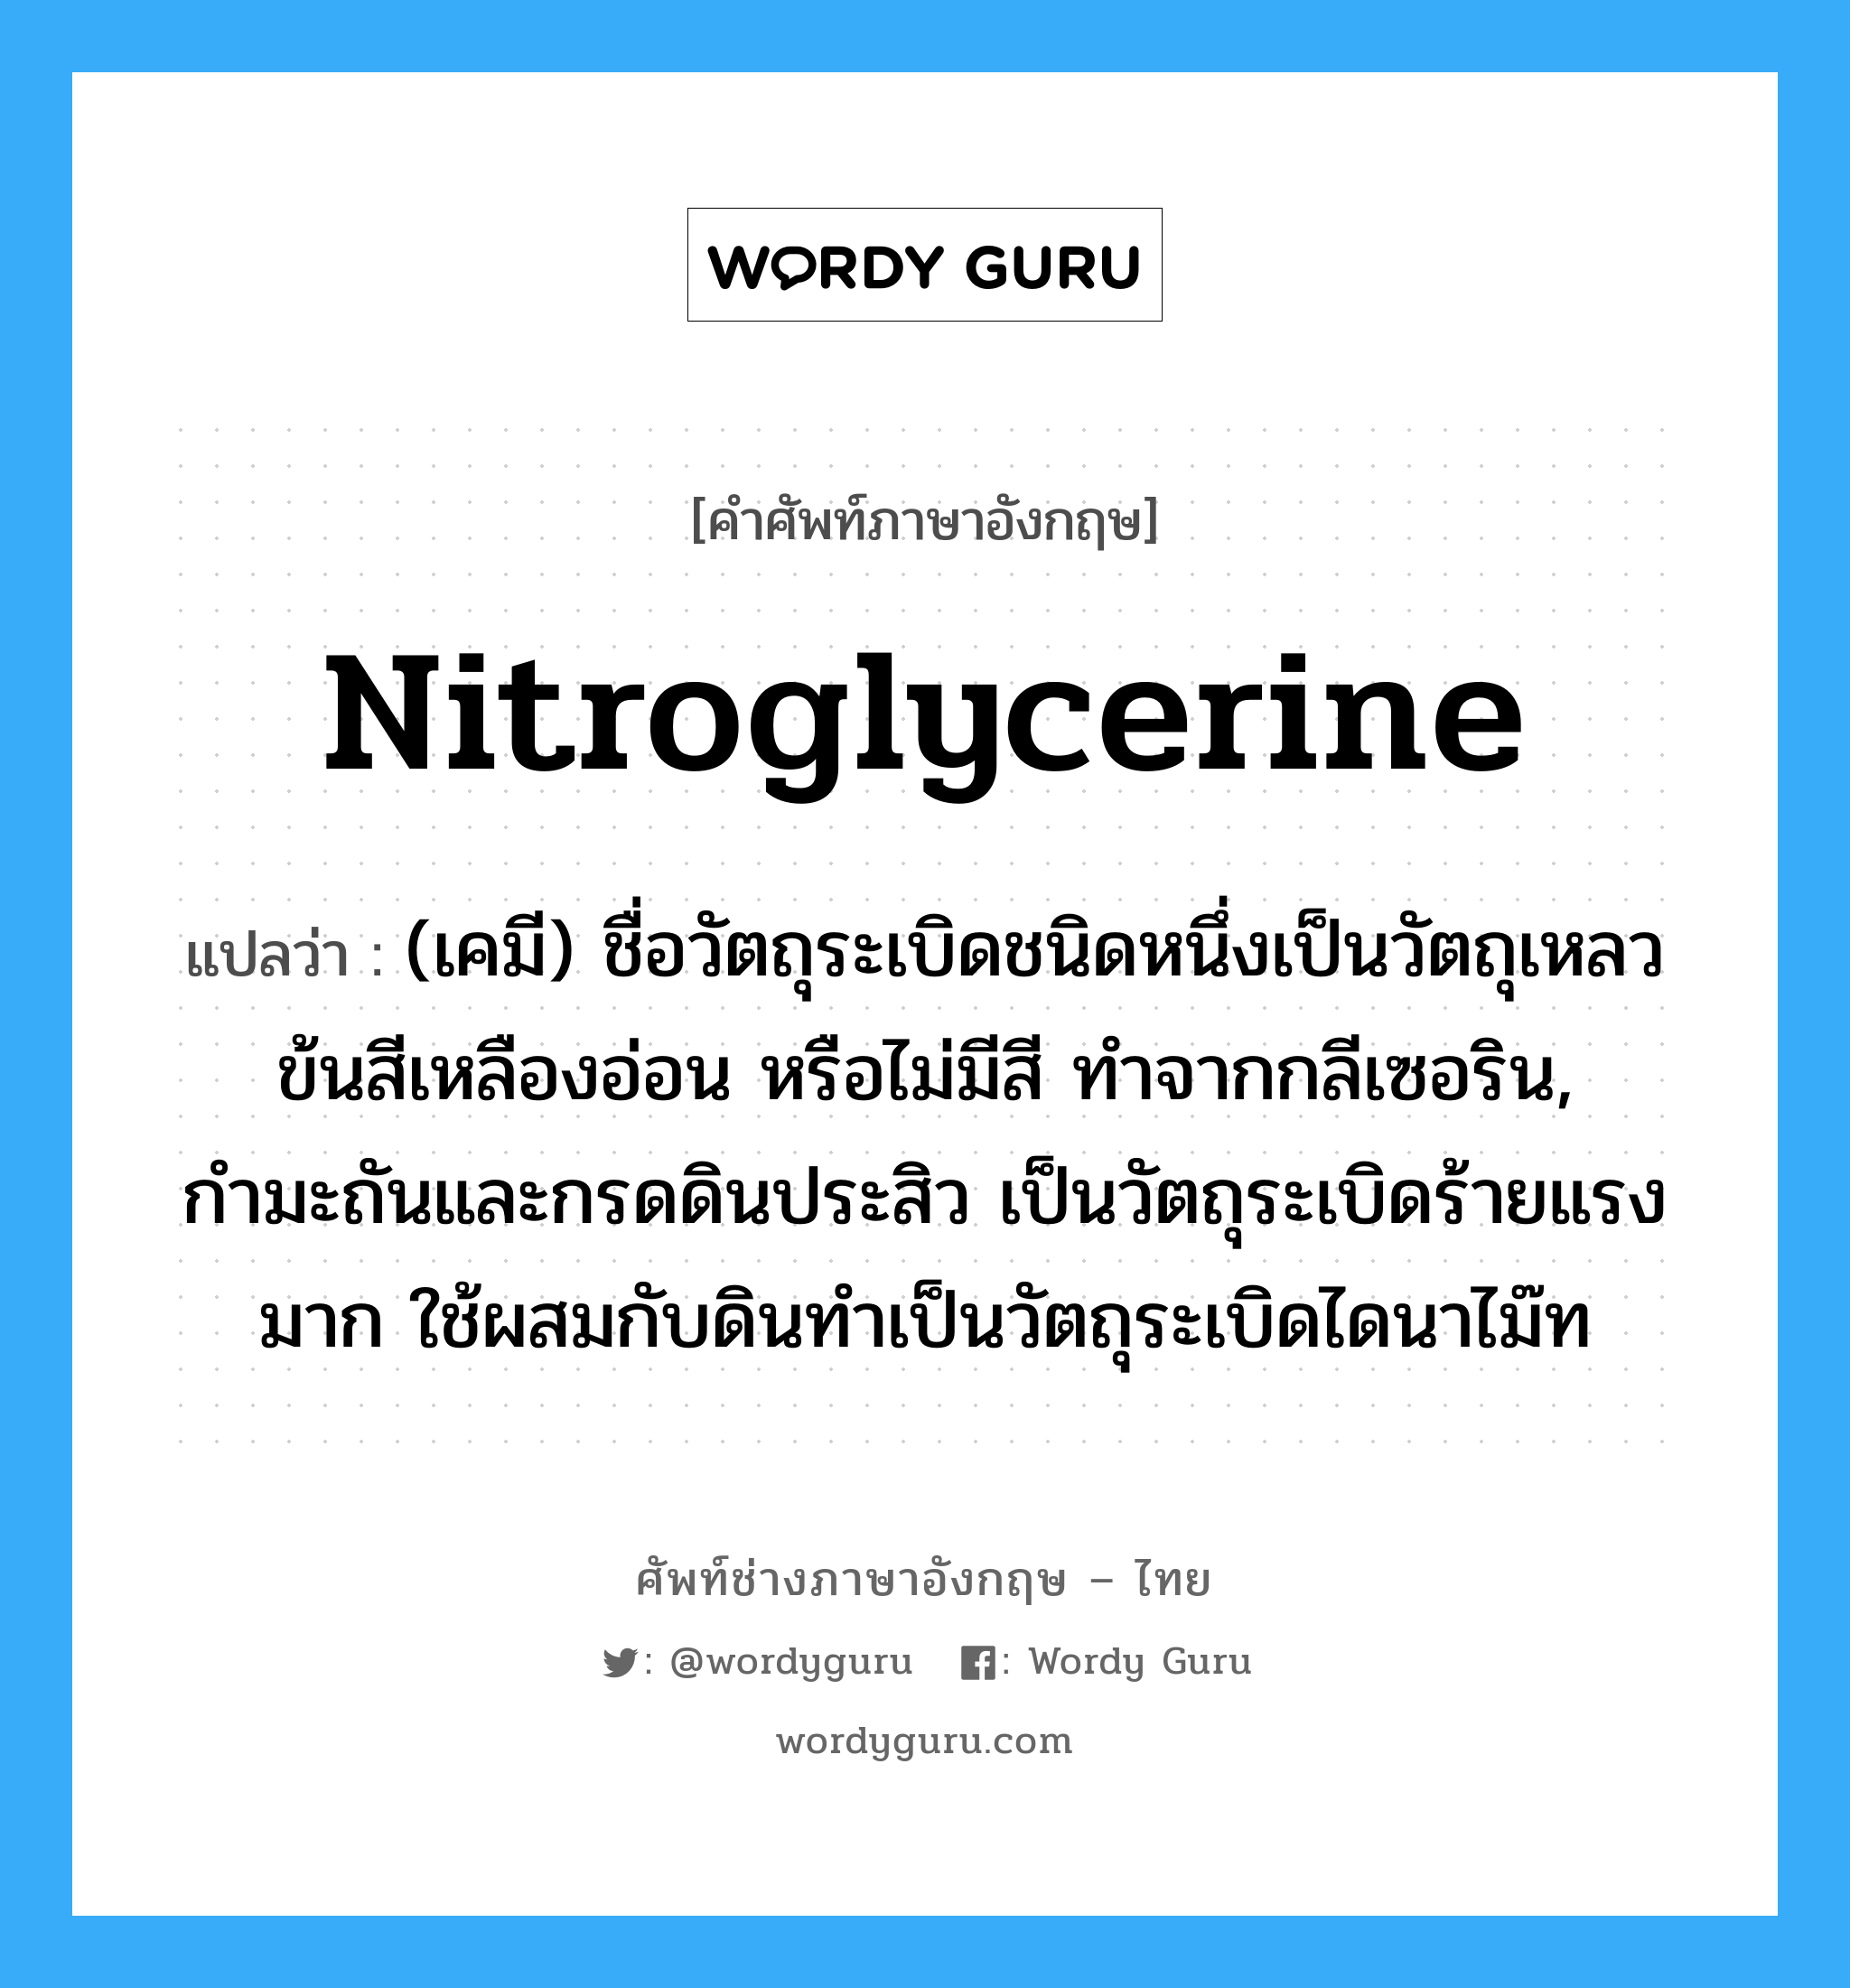 nitroglycerine แปลว่า?, คำศัพท์ช่างภาษาอังกฤษ - ไทย nitroglycerine คำศัพท์ภาษาอังกฤษ nitroglycerine แปลว่า (เคมี) ชื่อวัตถุระเบิดชนิดหนึ่งเป็นวัตถุเหลวข้นสีเหลืองอ่อน หรือไม่มีสี ทำจากกลีเซอริน, กำมะถันและกรดดินประสิว เป็นวัตถุระเบิดร้ายแรงมาก ใช้ผสมกับดินทำเป็นวัตถุระเบิดไดนาไม๊ท